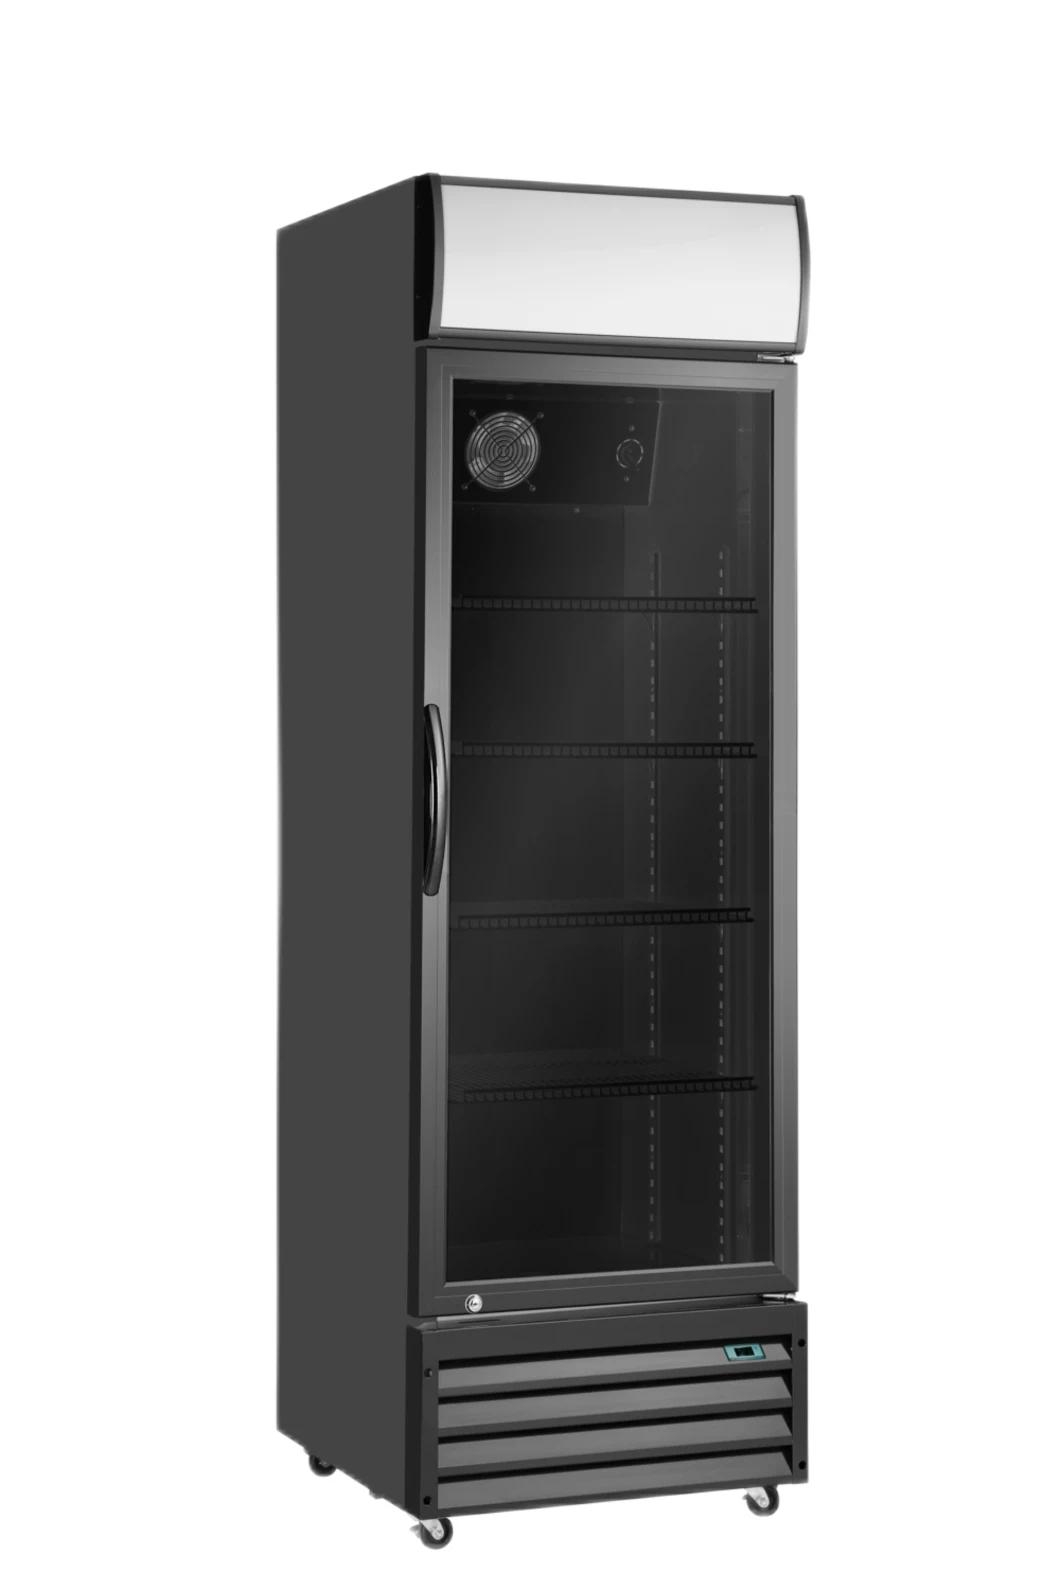 Ksa, Saudi Arabia, Black Single Door Commercial Glass Display Showcase Drink Coolers Upright Fridge Refrigerators for Sale